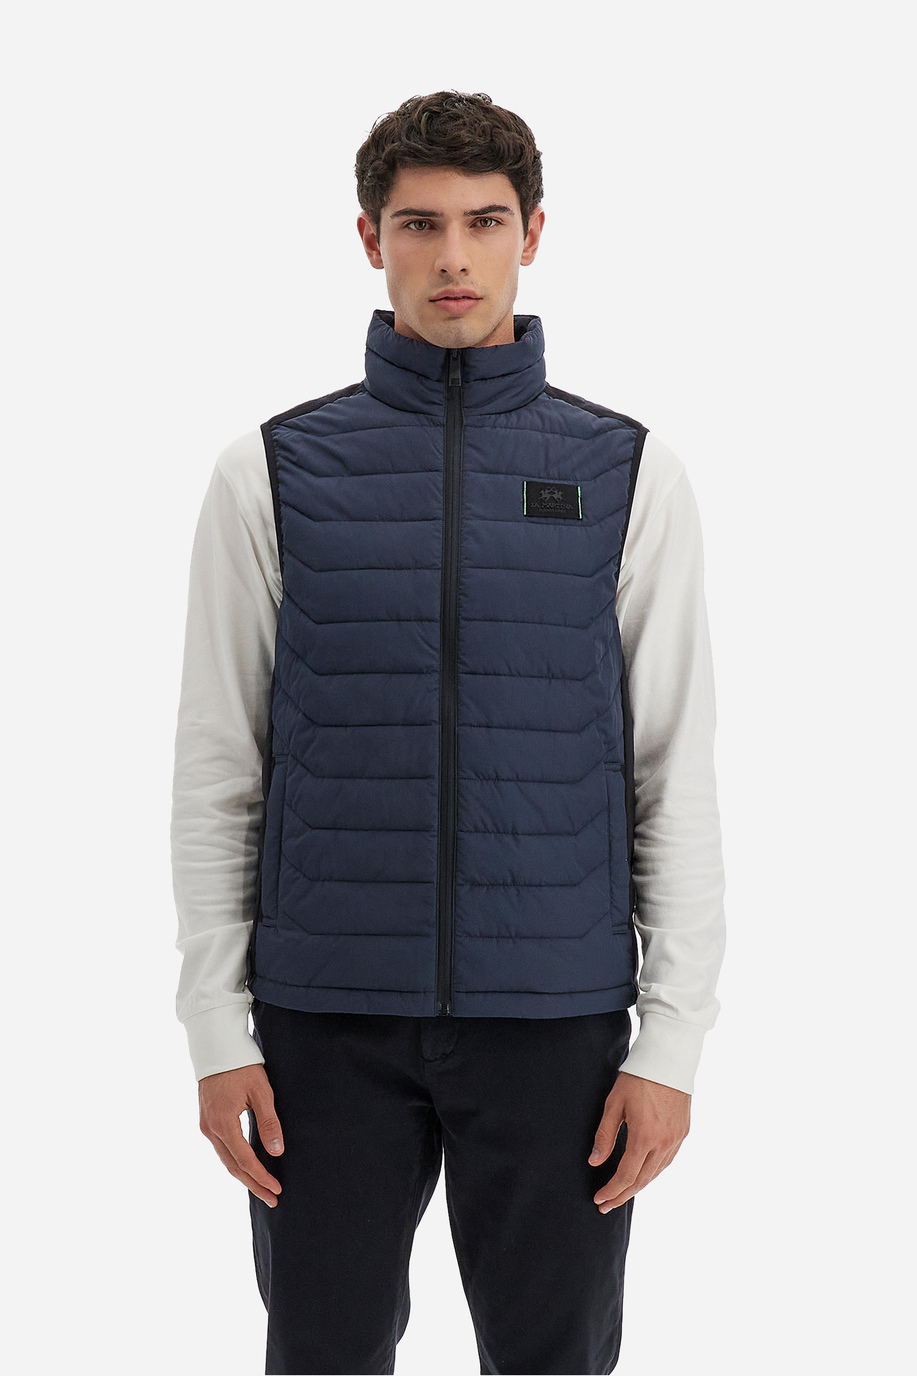 Men's sleeveless bomber jacket full zip high collar Logos - Varen - Spring jackets | La Martina - Official Online Shop